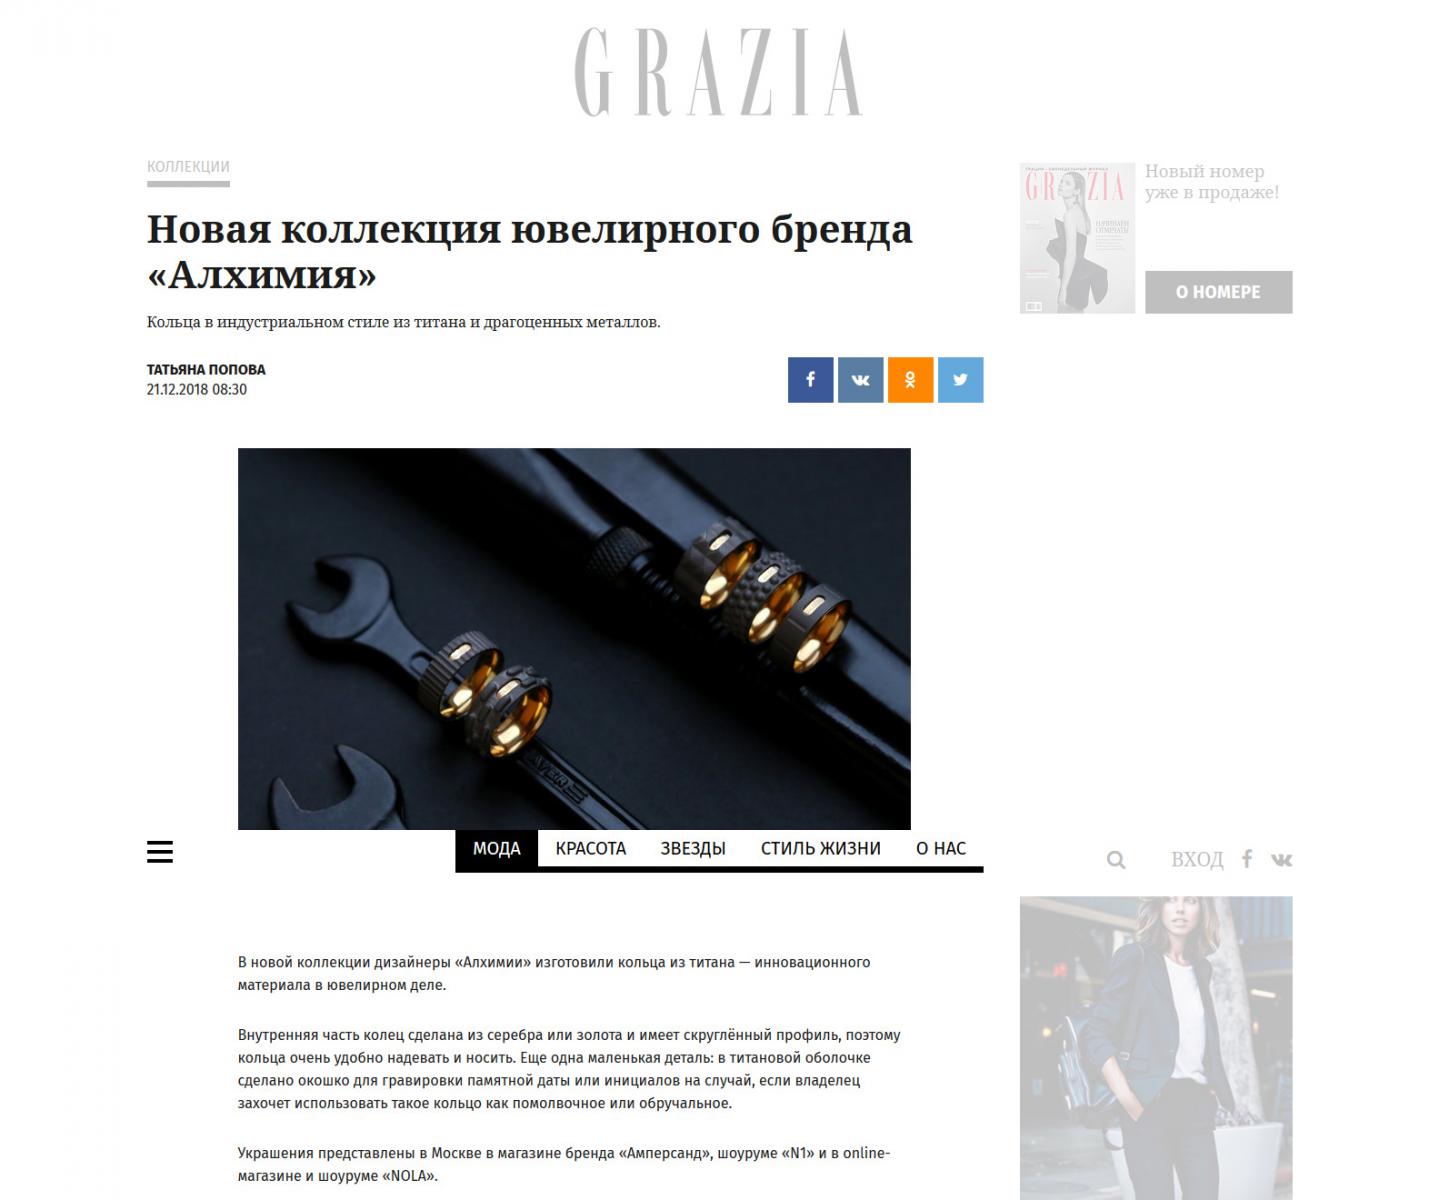 Публикация о коллекции «Индастриал» бренда «Алхимия» в журнале Grazia